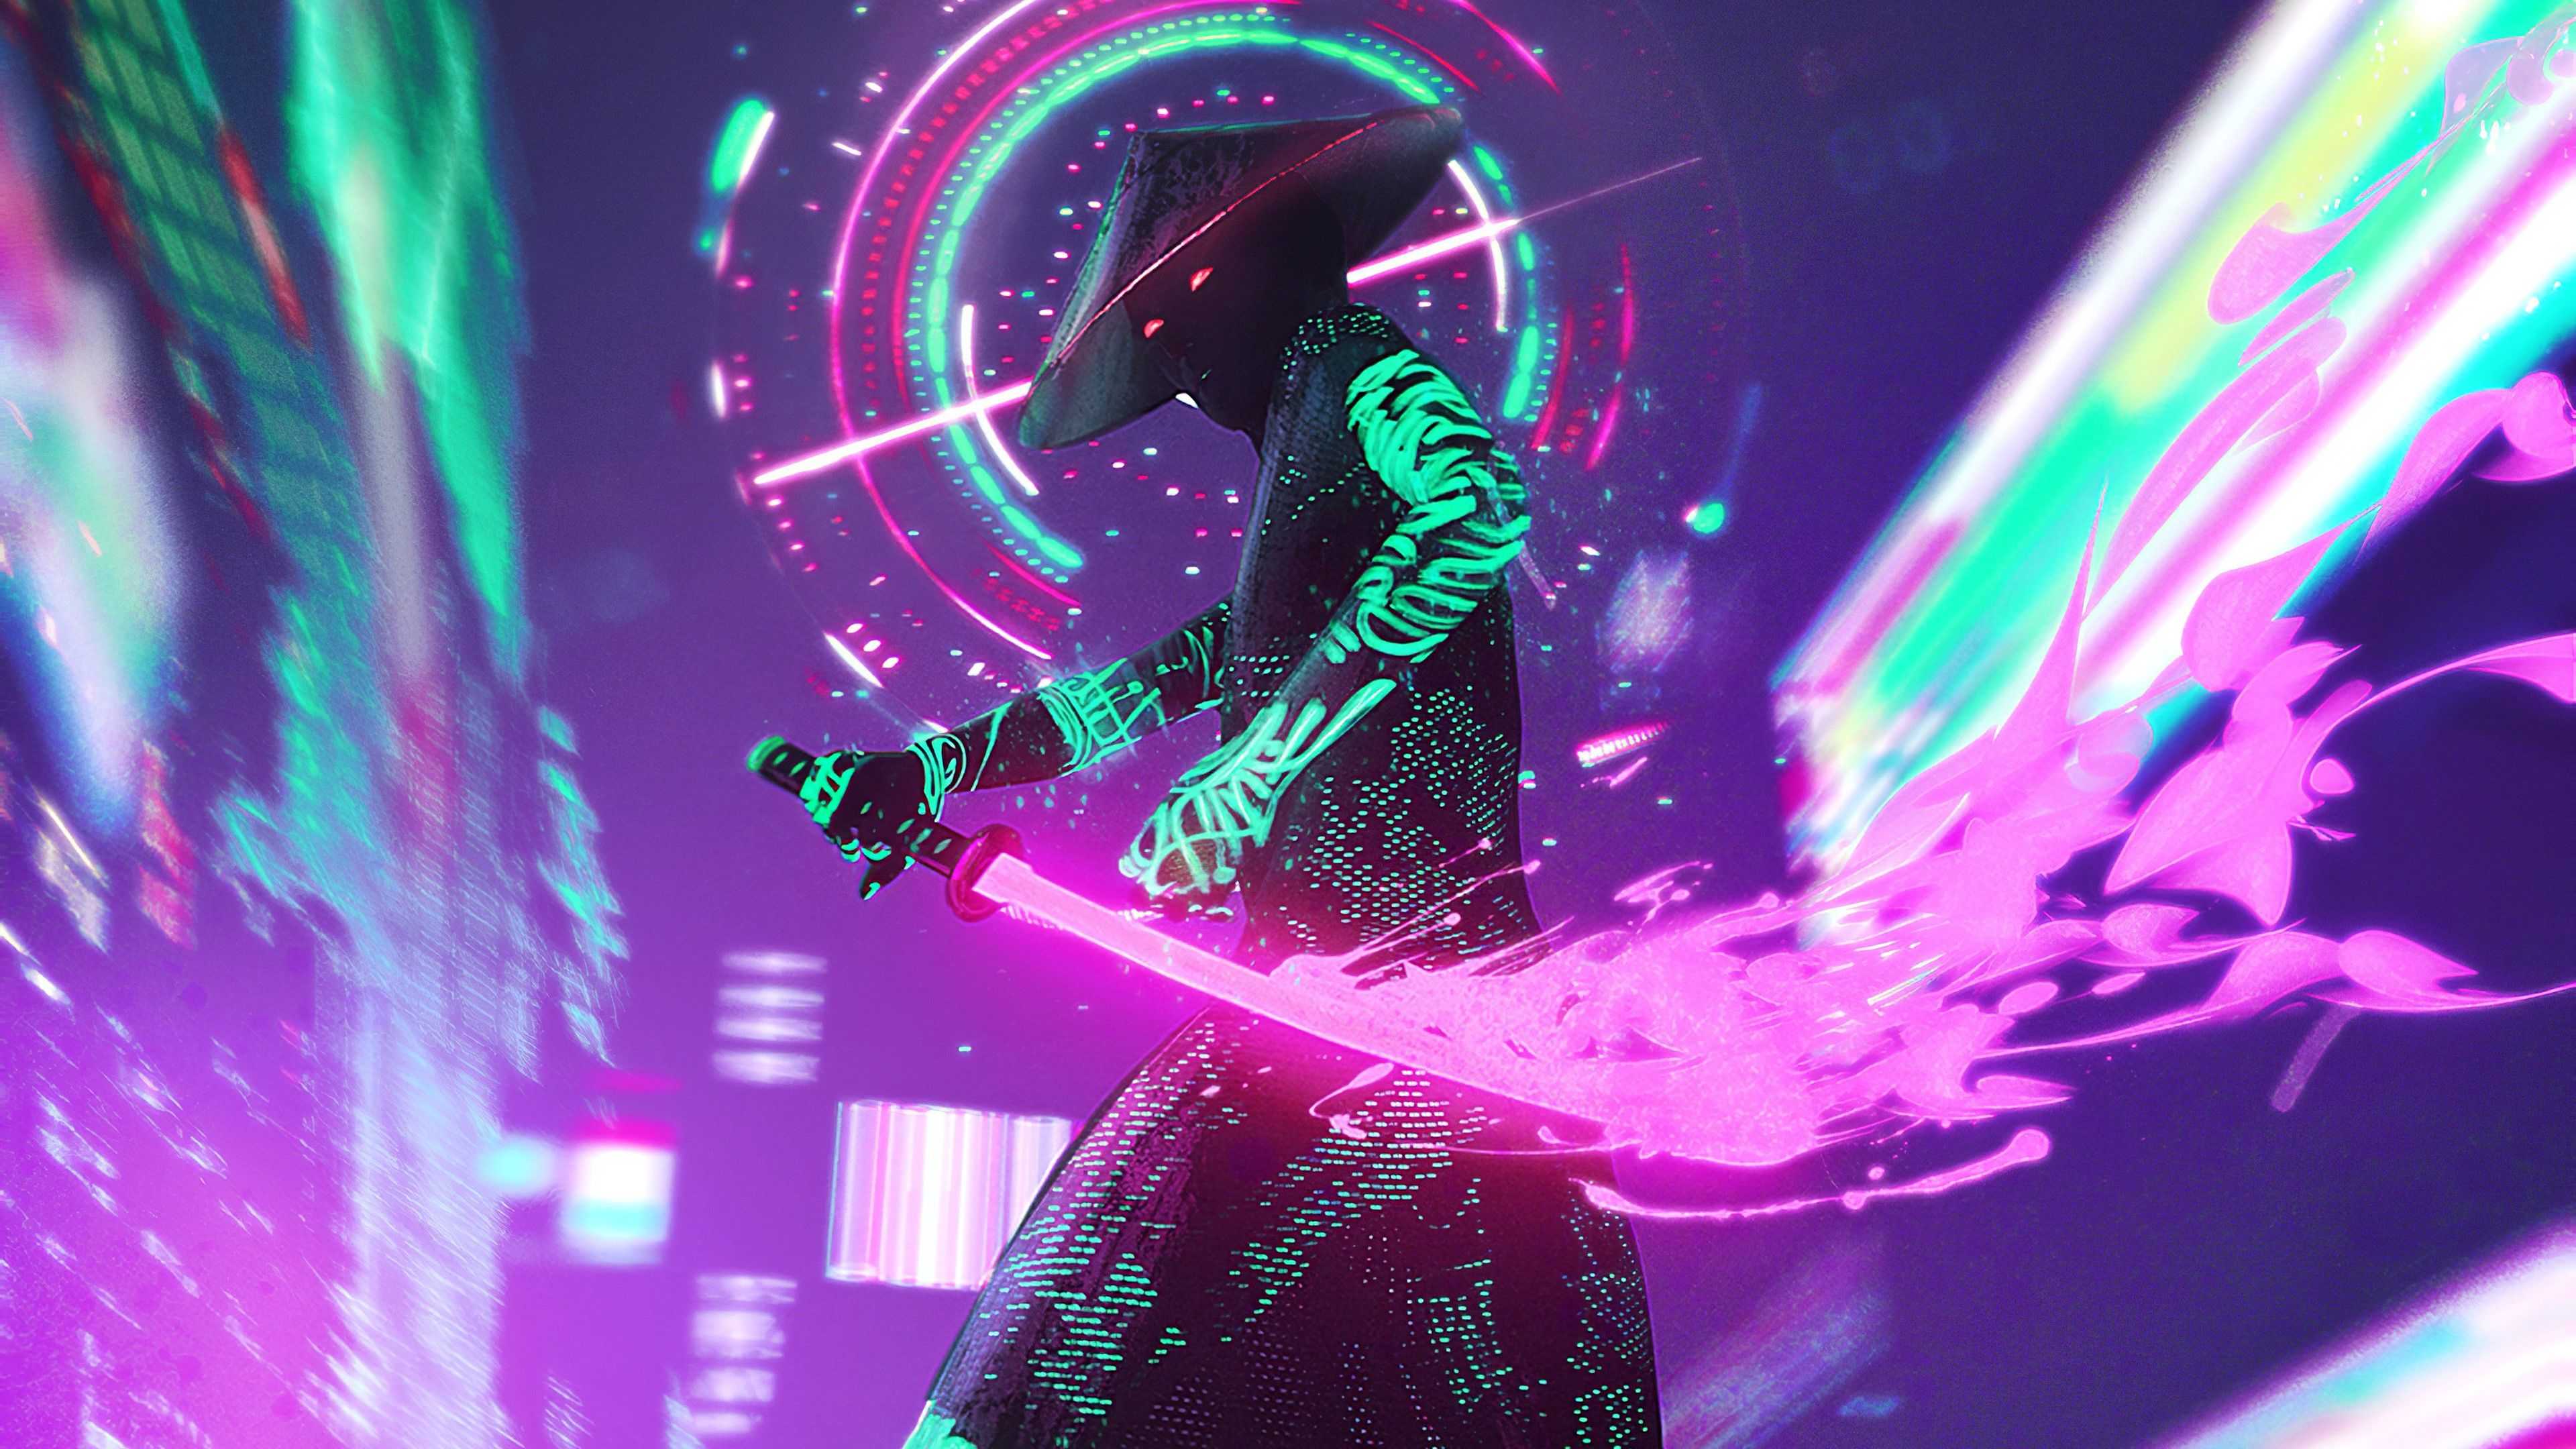 A man in neon clothing holding an umbrella - Cyberpunk